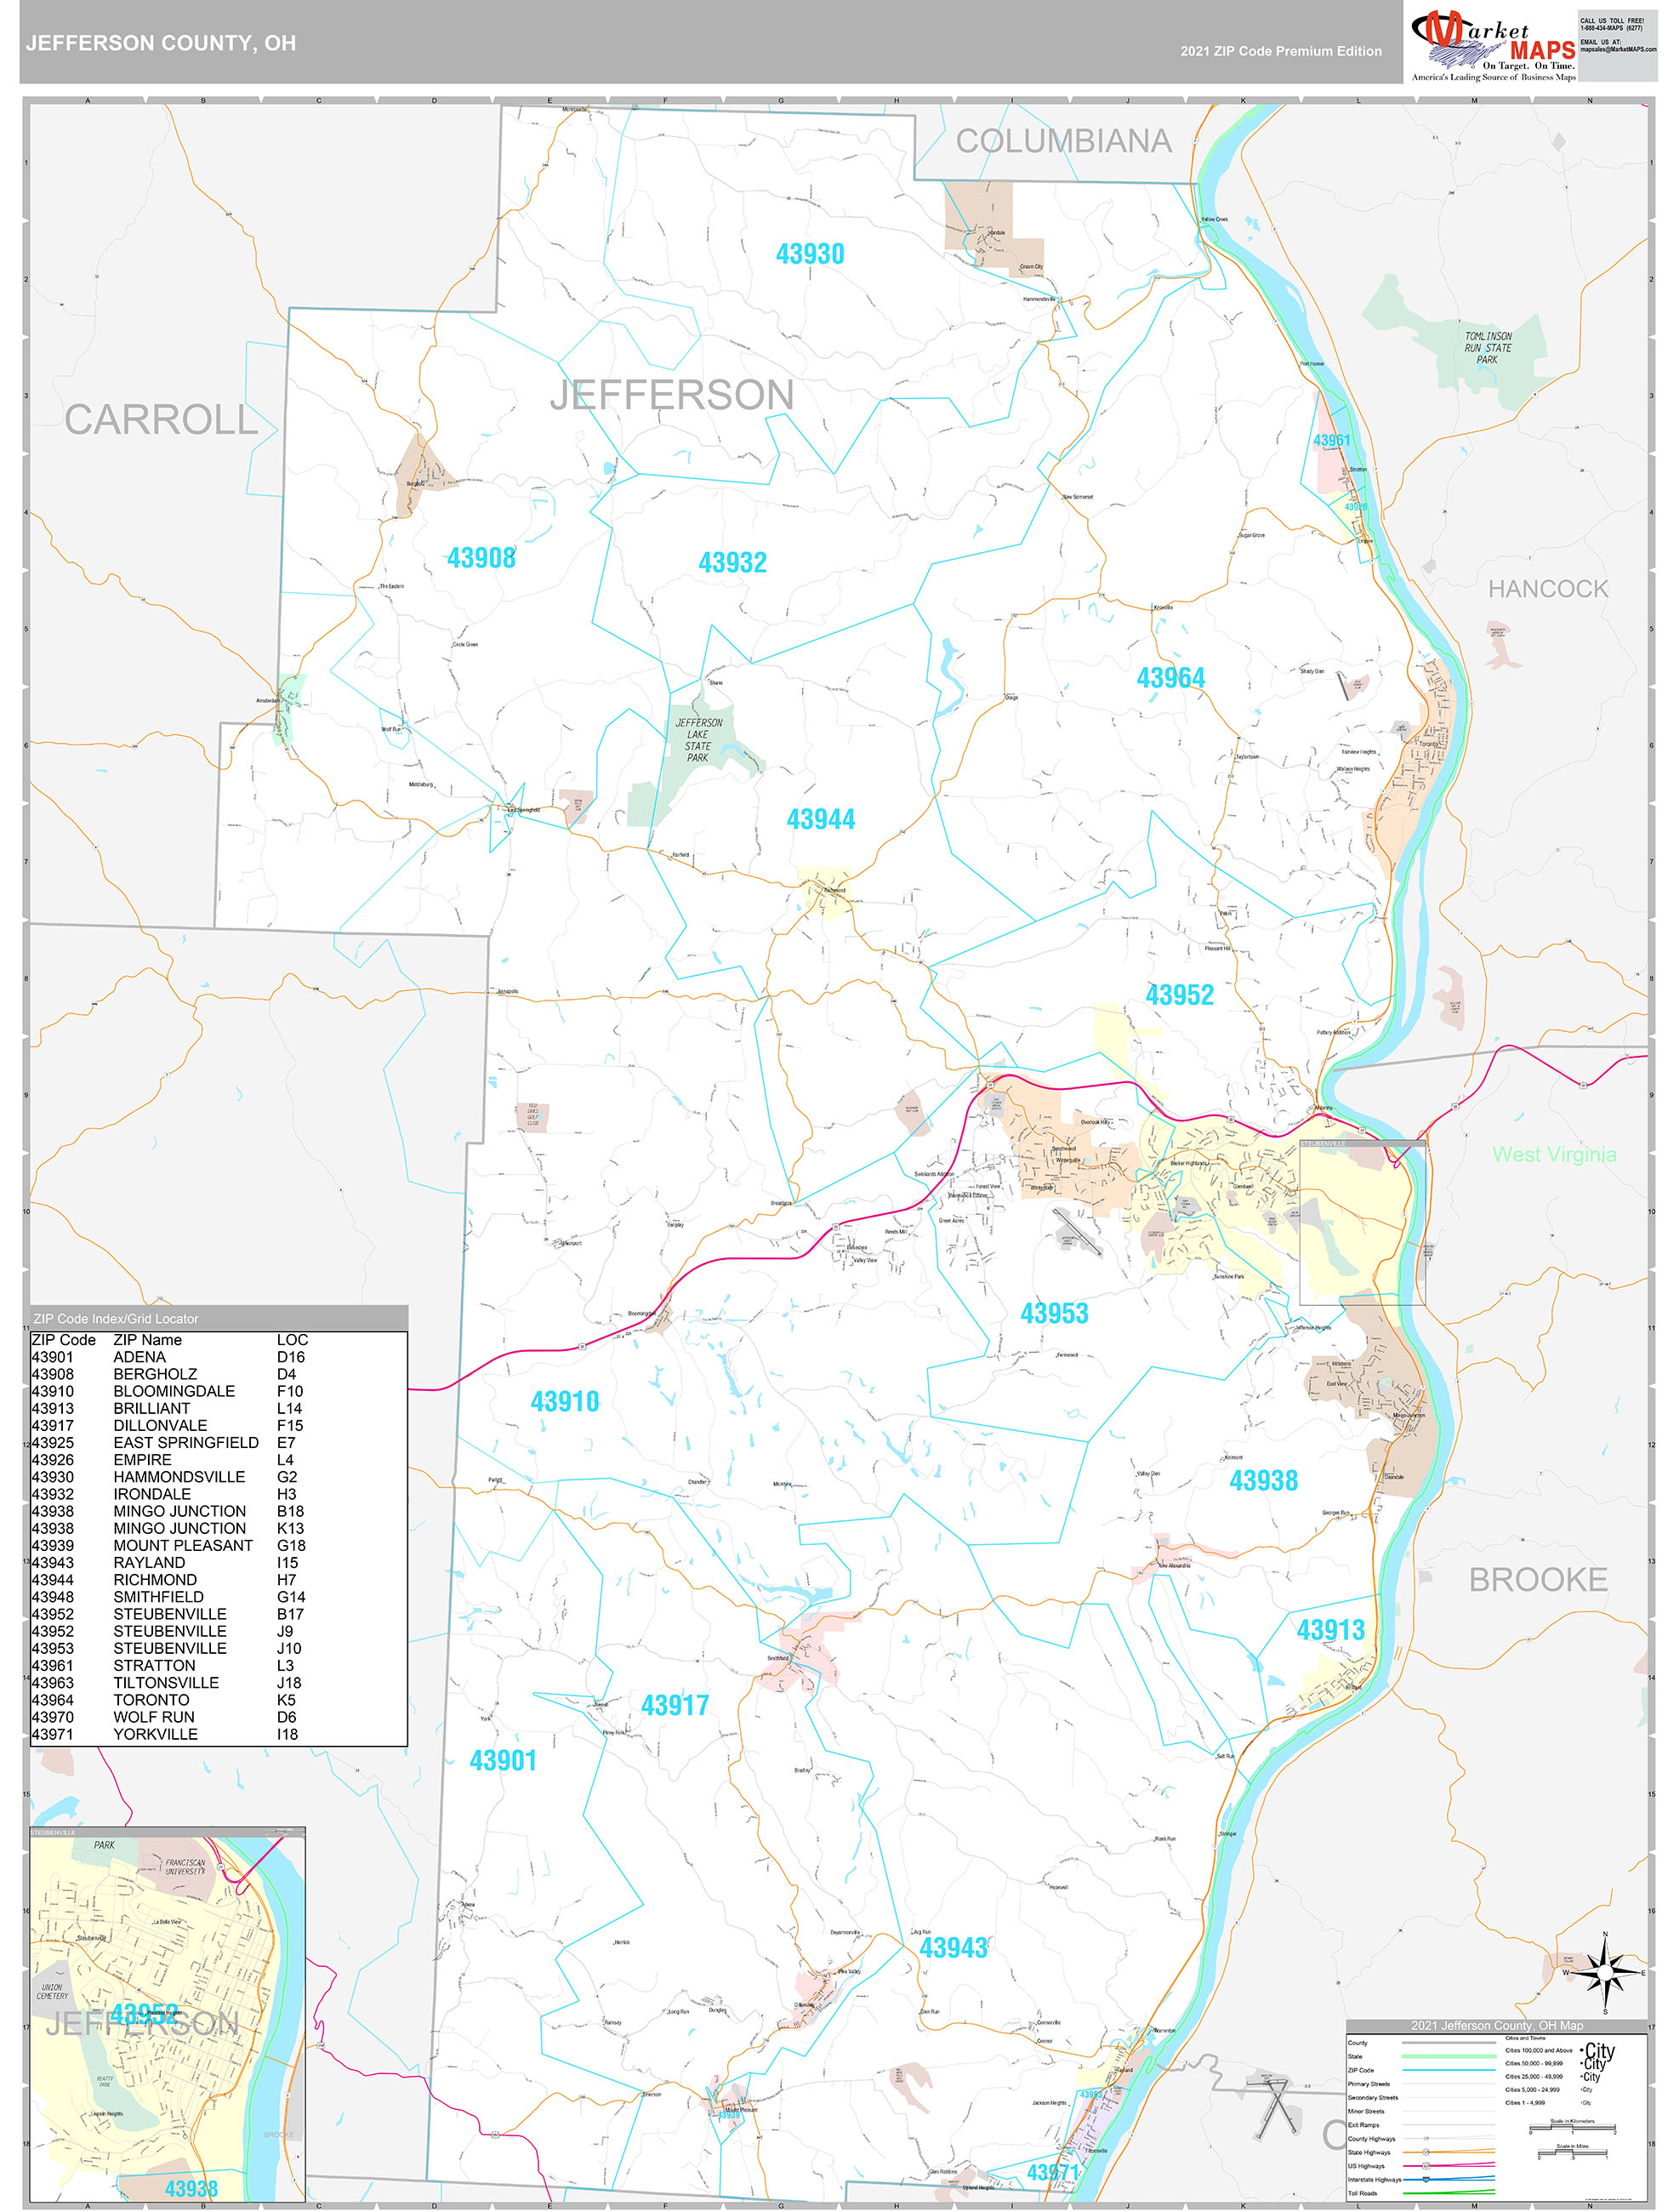 Jefferson County OH Wall Map Premium Style by MarketMAPS